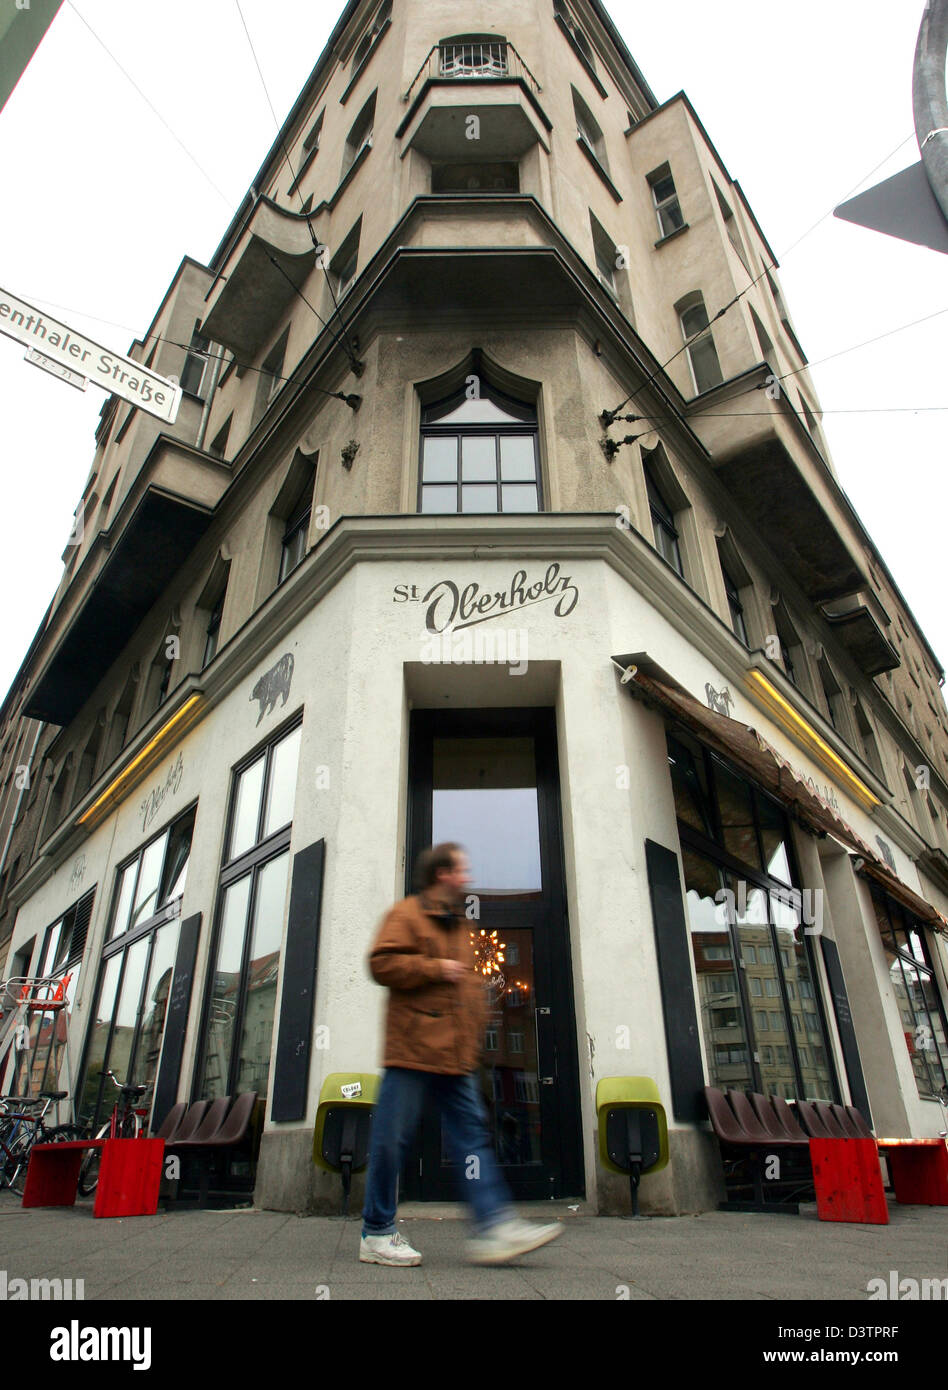 Das Foto zeigt das Internetcafé "St. Oberholz" in Berlin, Montag, 30. Oktober 2006. Das Café bietet seinen Gästen gratis-W-LAN Zugang. Foto: Gero Breloer Stockfoto